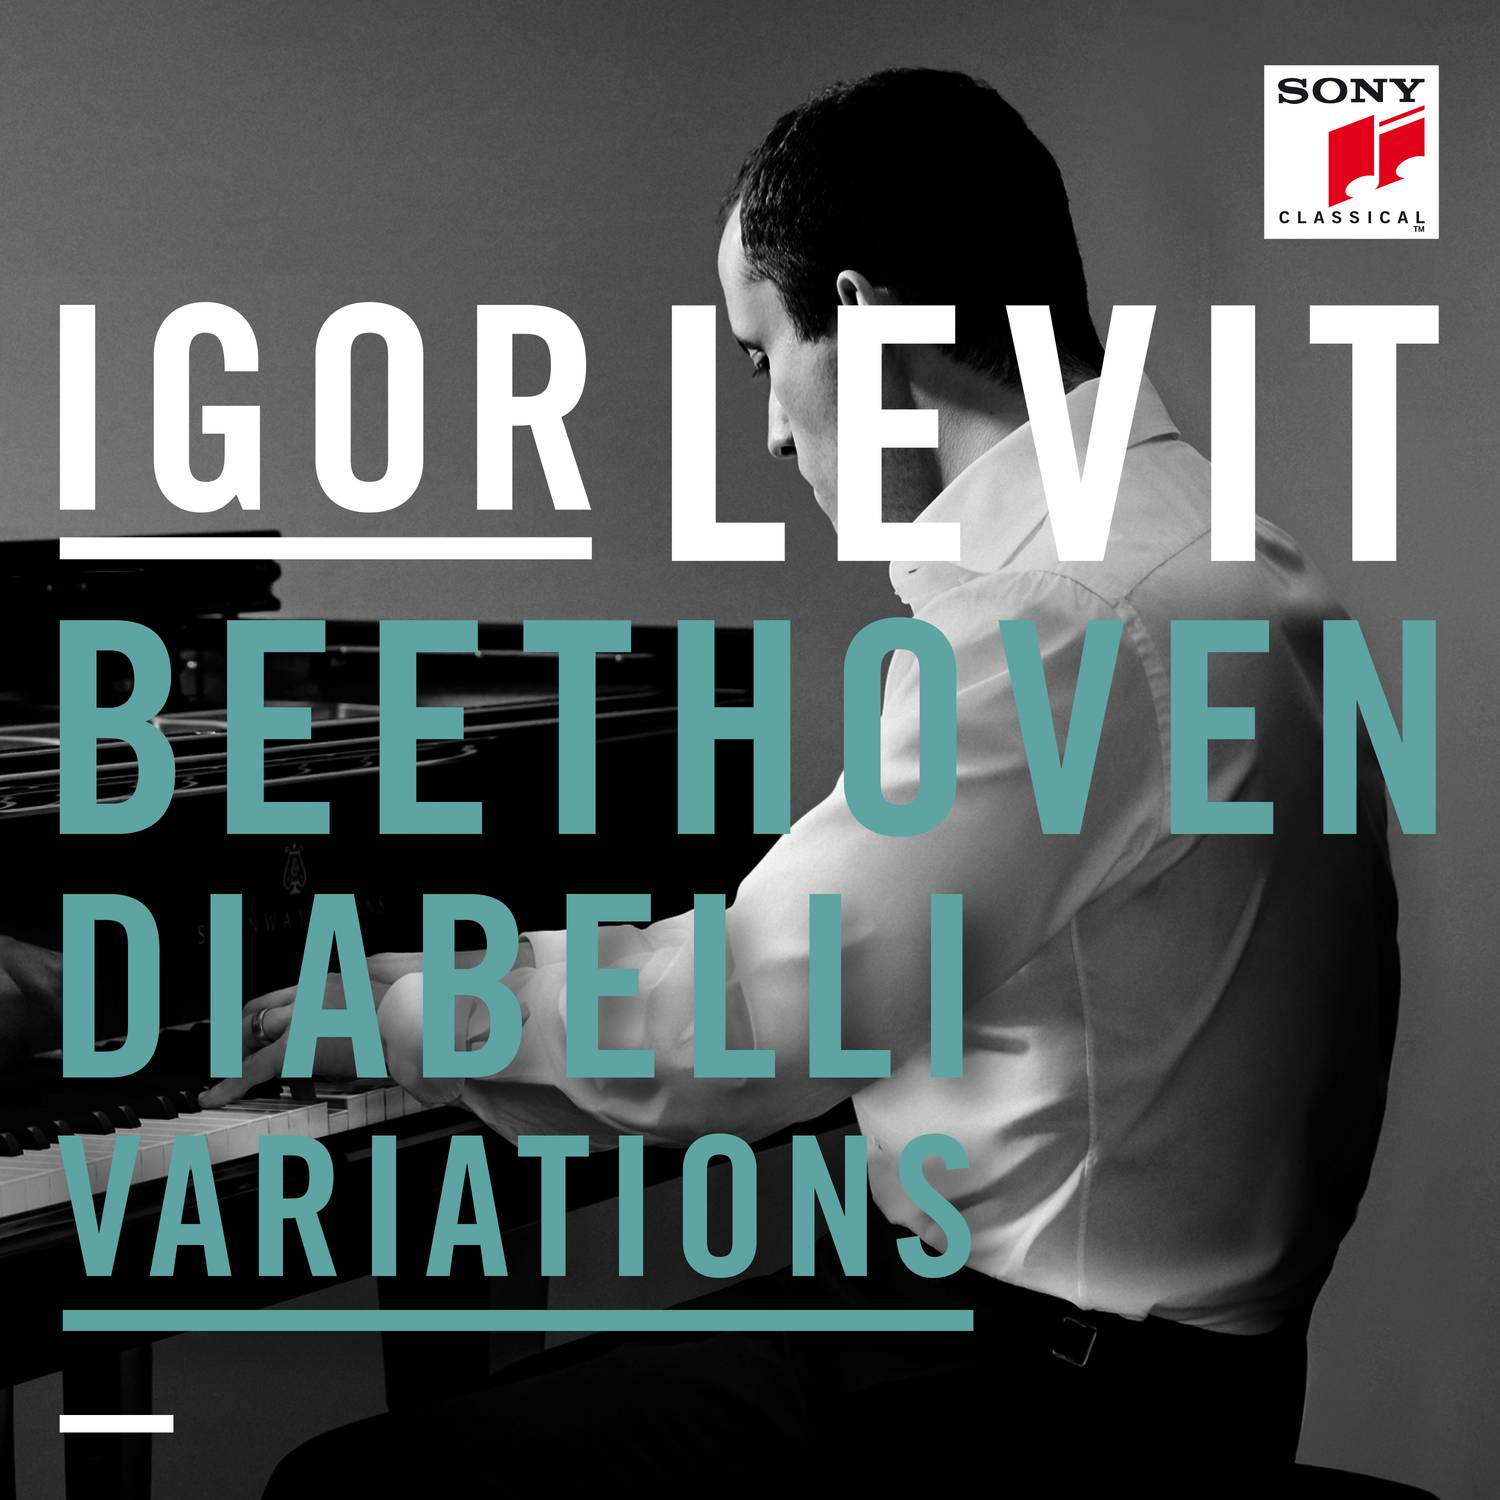 Diabelli Variations - 33 Variations on a Waltz by Anton Diabelli, Op. 120:Var. 11 - Allegretto